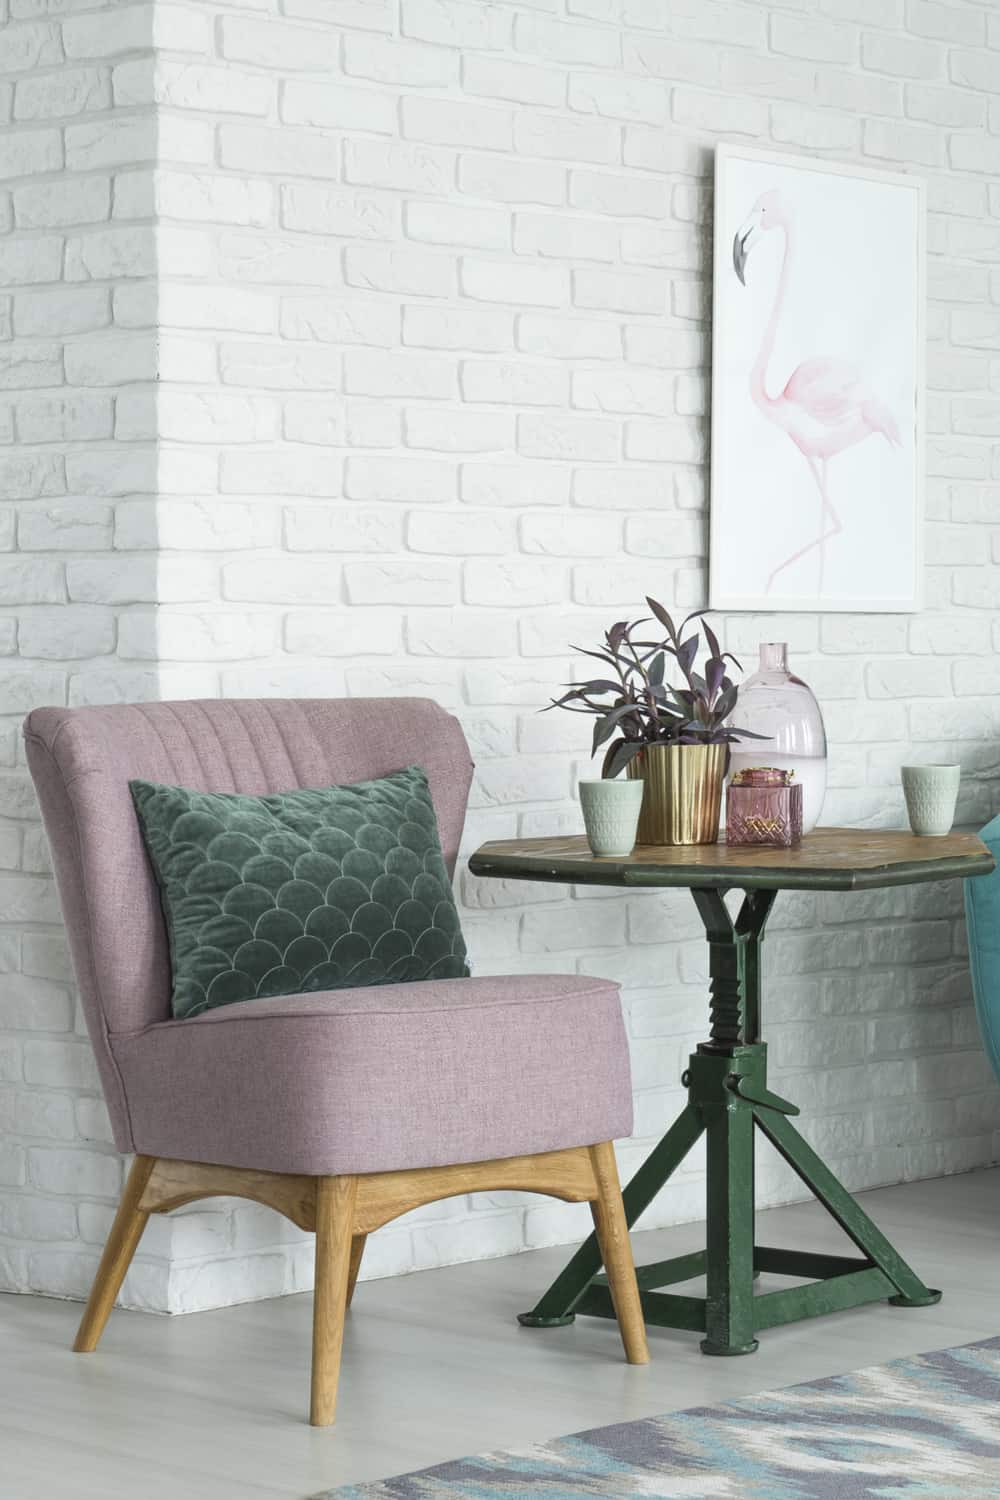 17 Easy Homemade Chair Cover Ideas